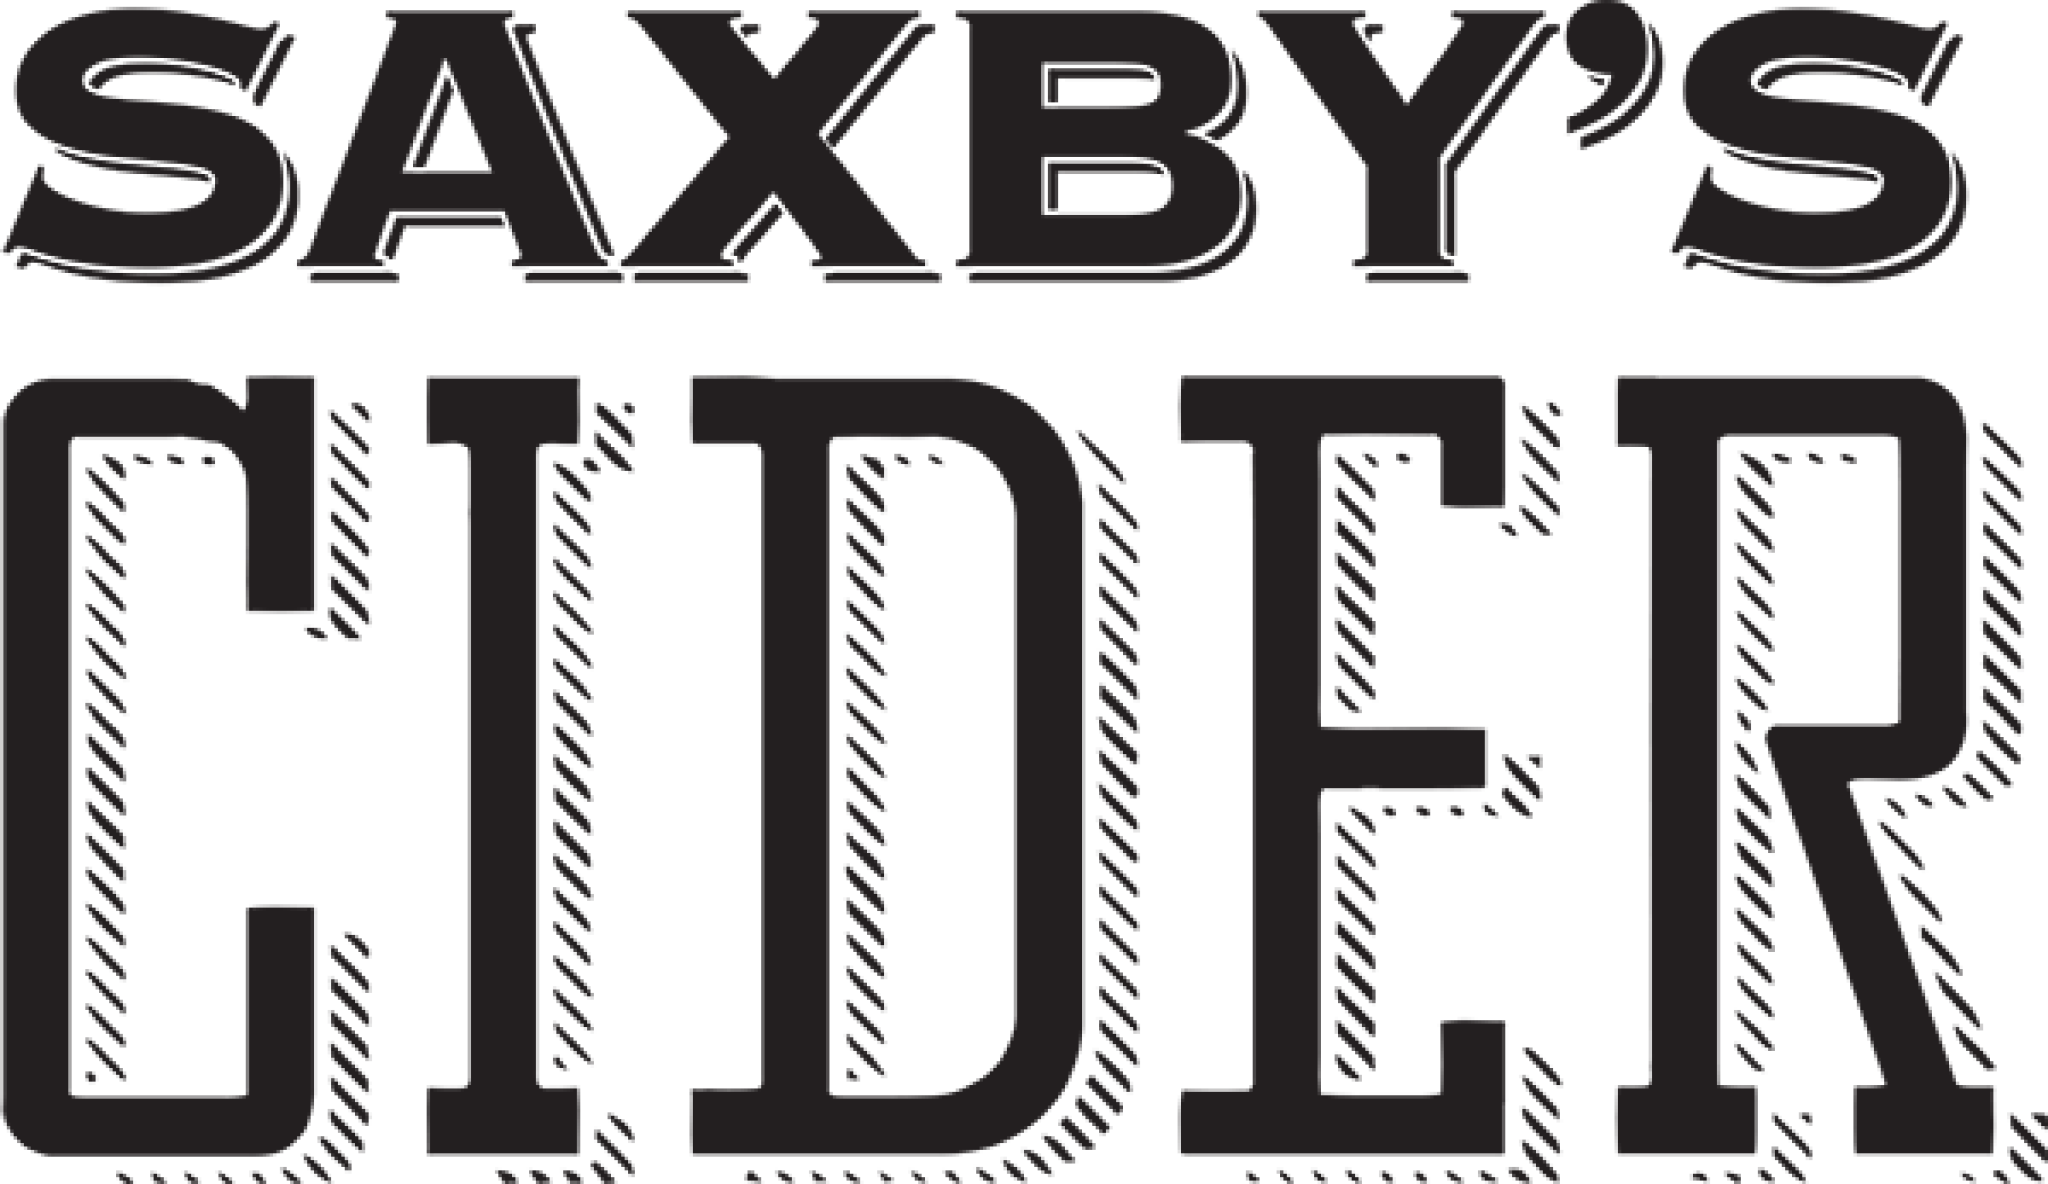 saxbys-cider-logo.png